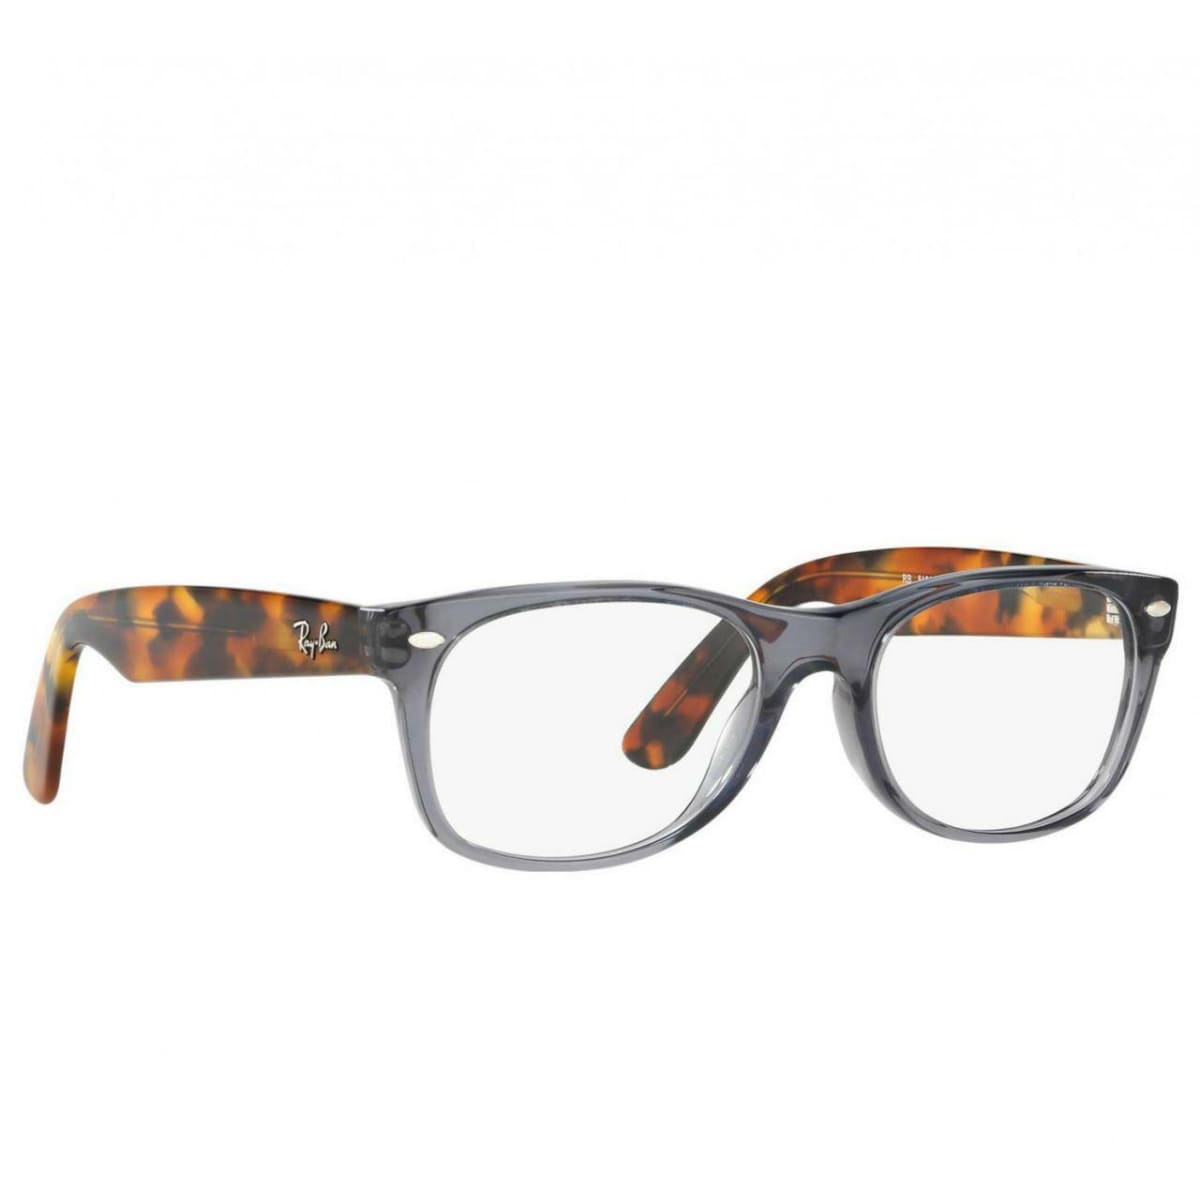 Ray-Ban RB5184-5629 New Wayfarer Women’s Grey / Tortoise Eyeglasses - On sale